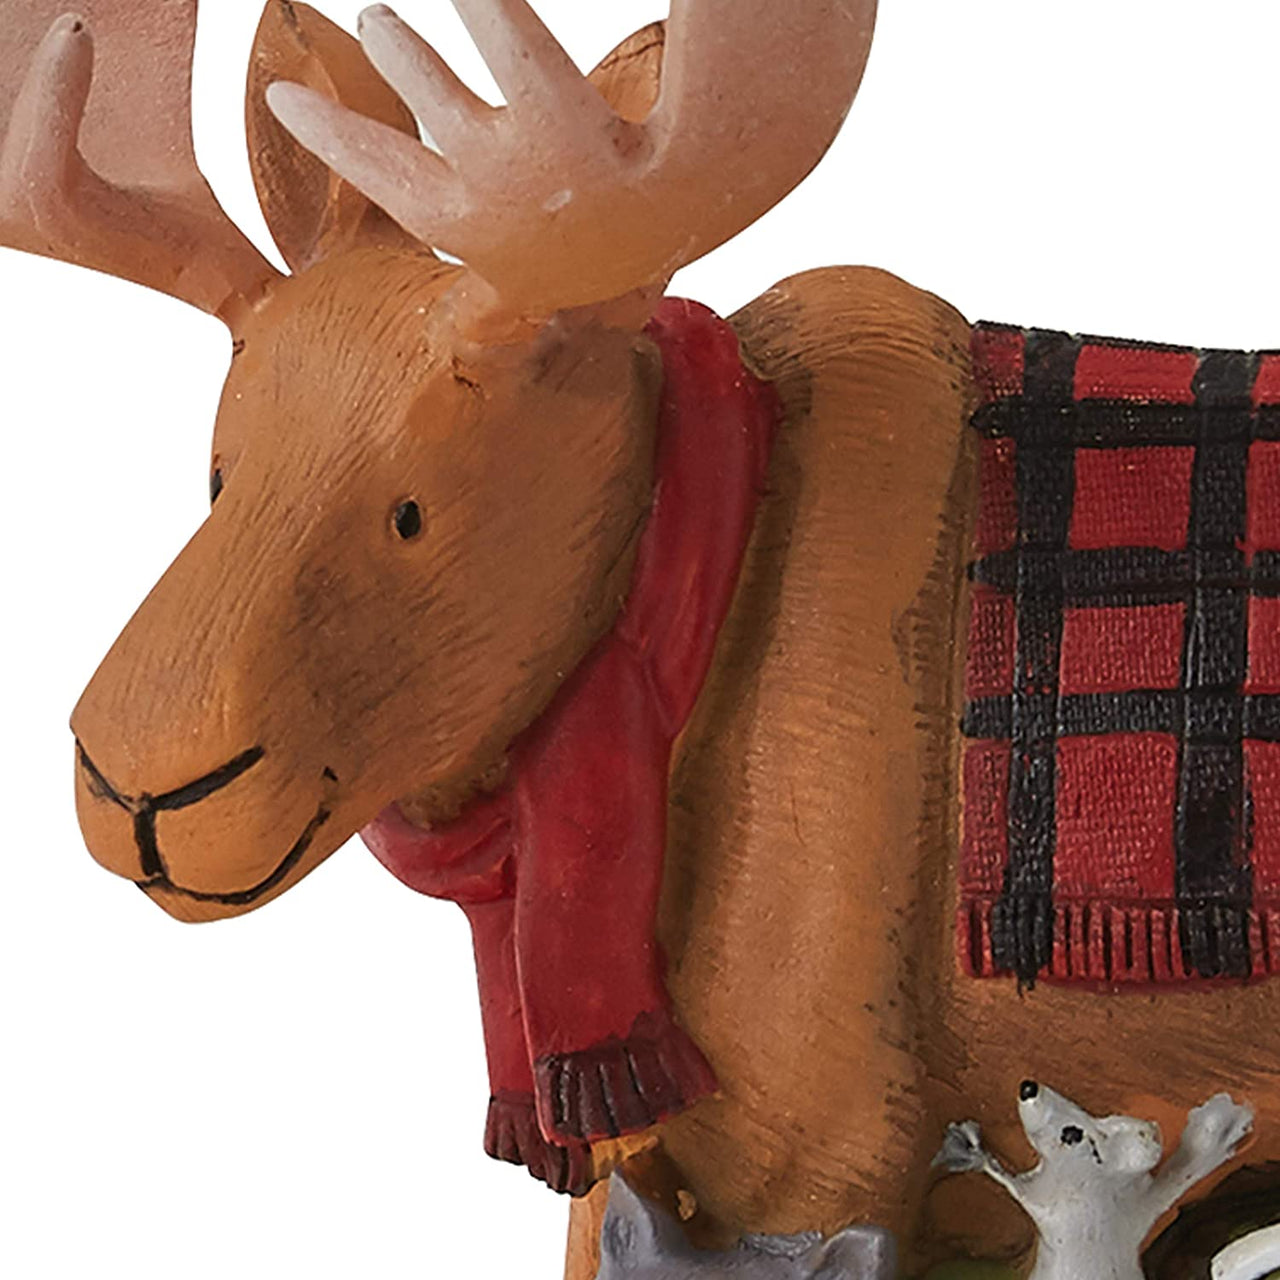 Moose Stocking Hanger - Set of 2 Park Designs